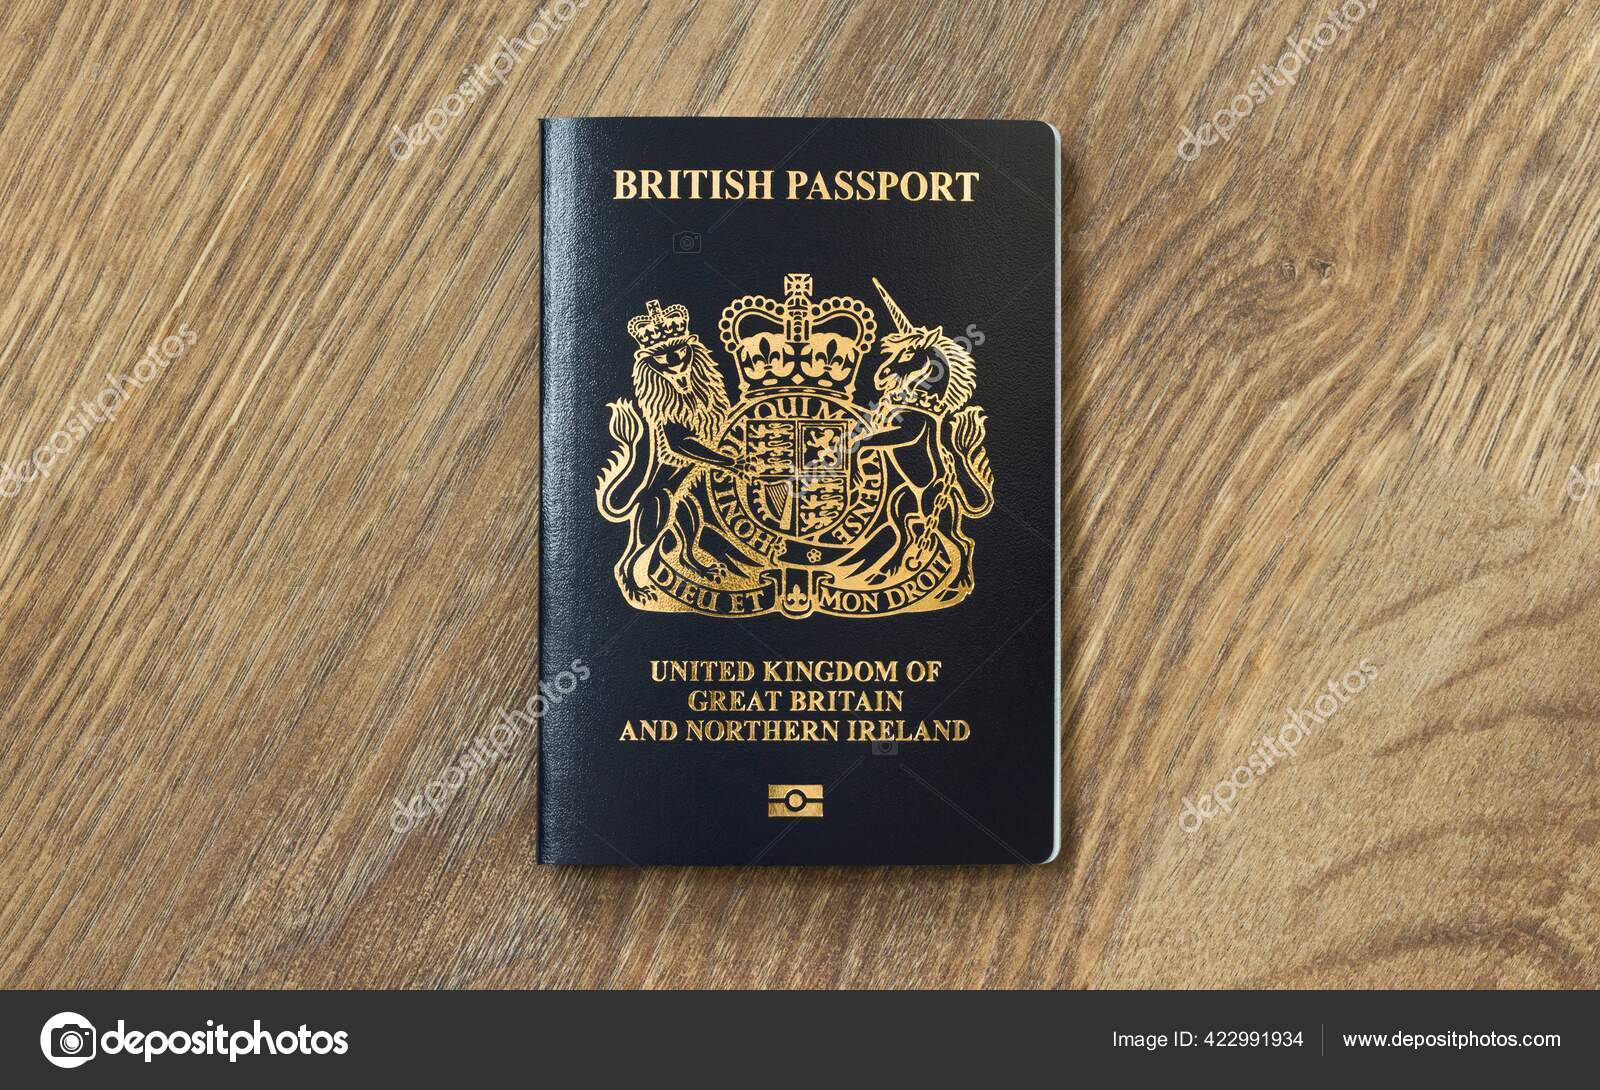 POS - Passport Cover